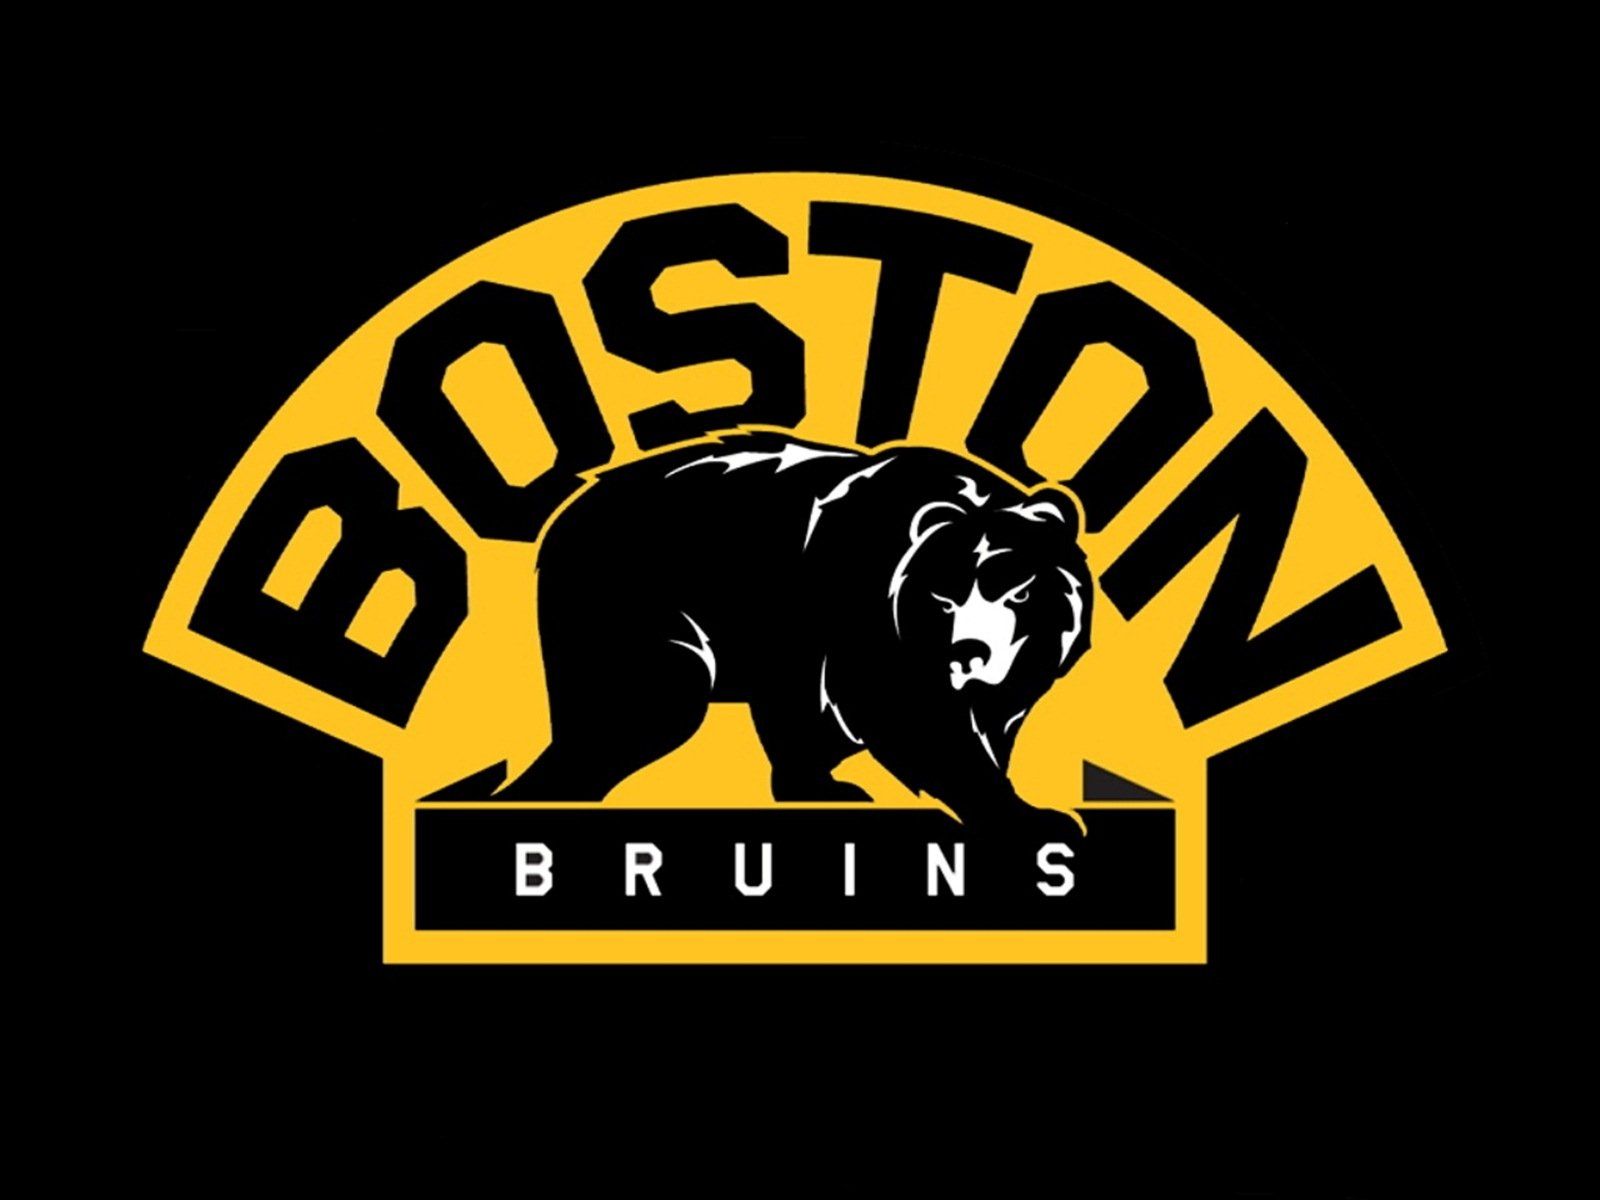 BOSTON BRUINS nhl hockey 13 wallpaper 1800x1200 336448